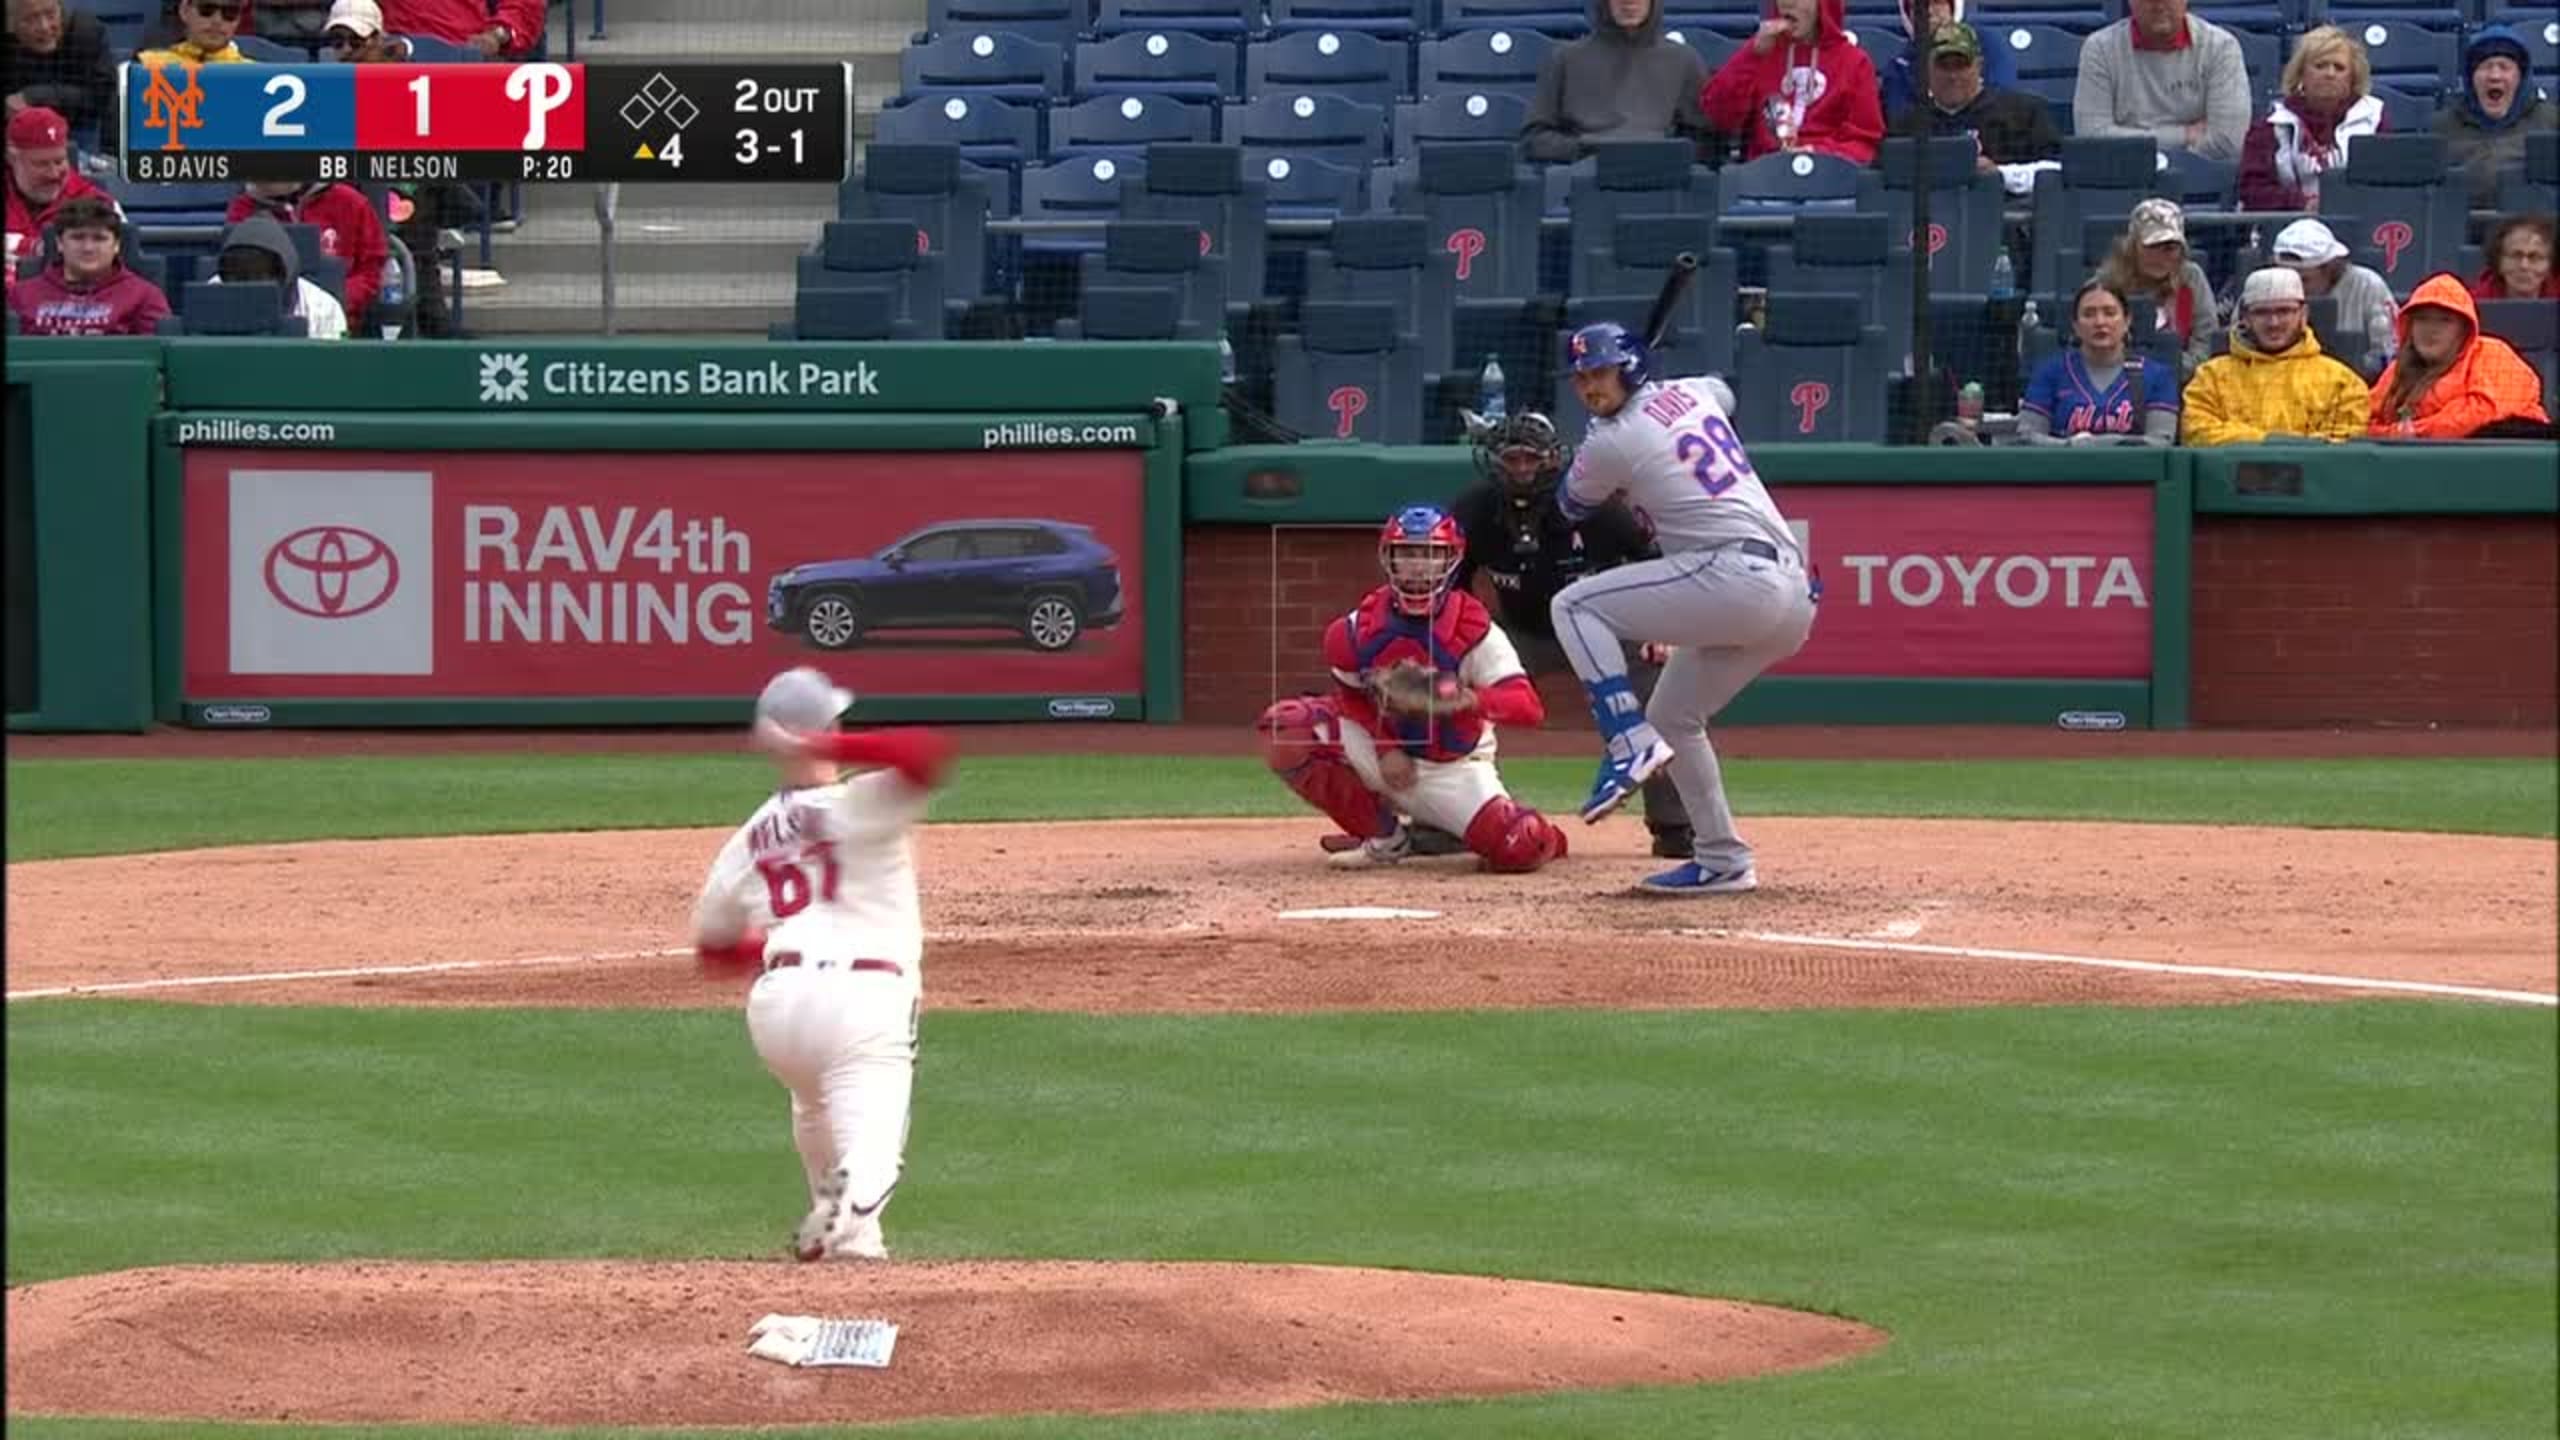 MLB on FOX on Instagram: This walk-off bat flip by J.D. Davis 🔥🔥🔥